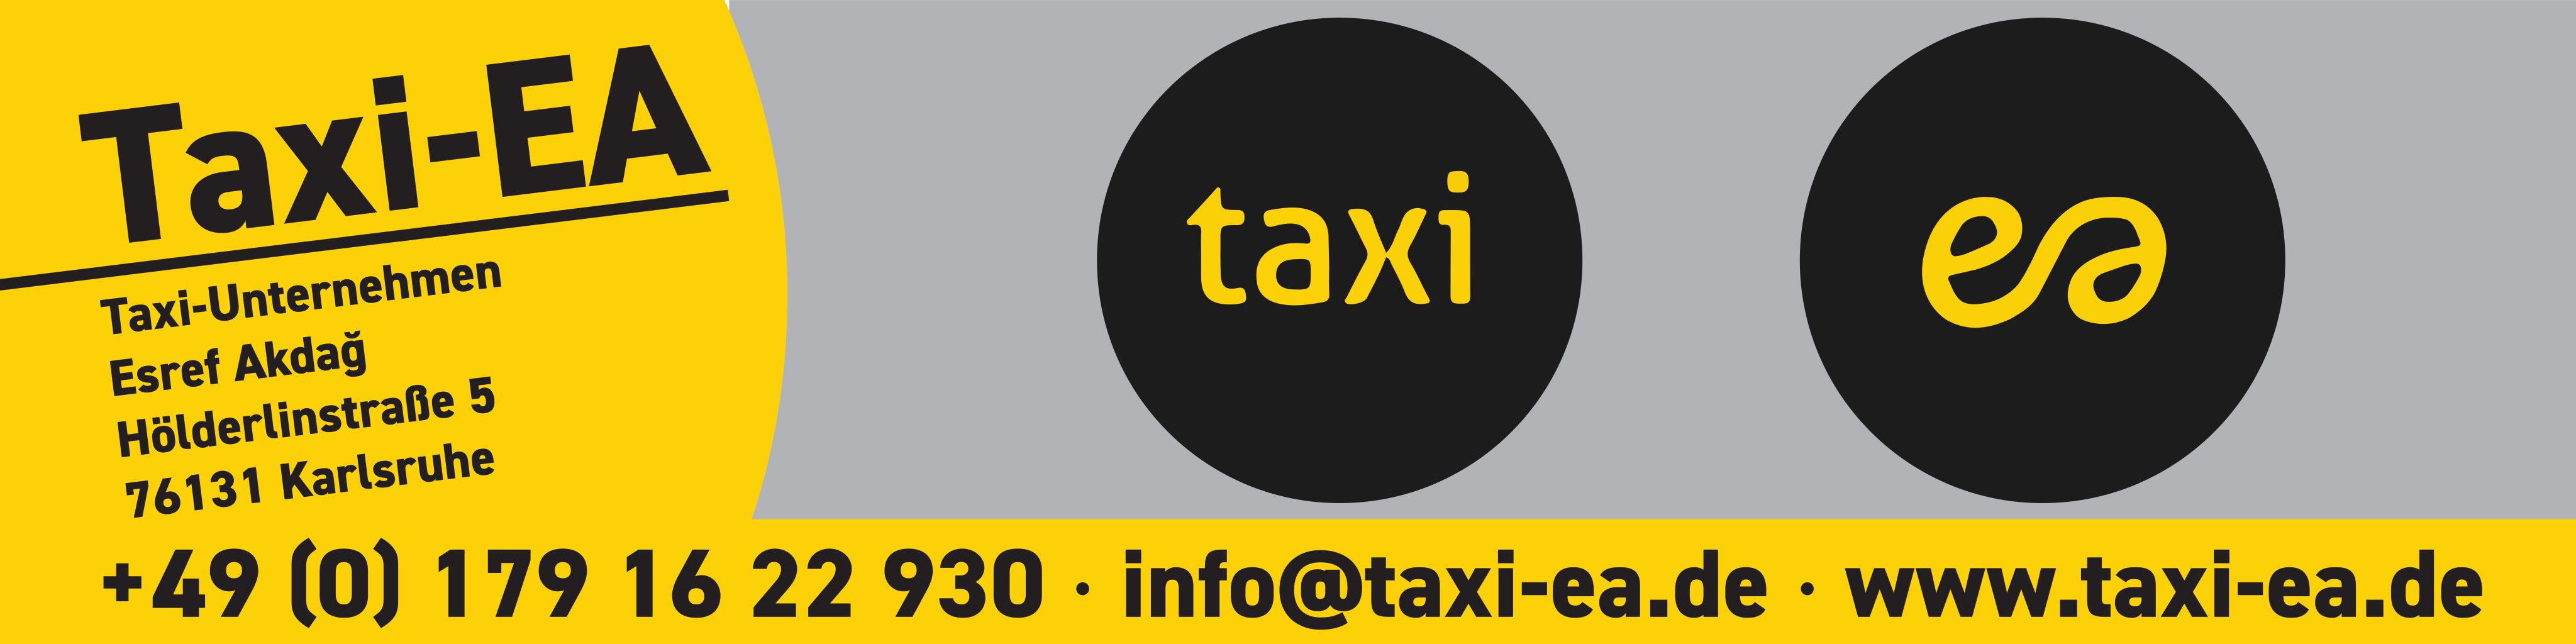 Taxi-EA_Banner.jpg